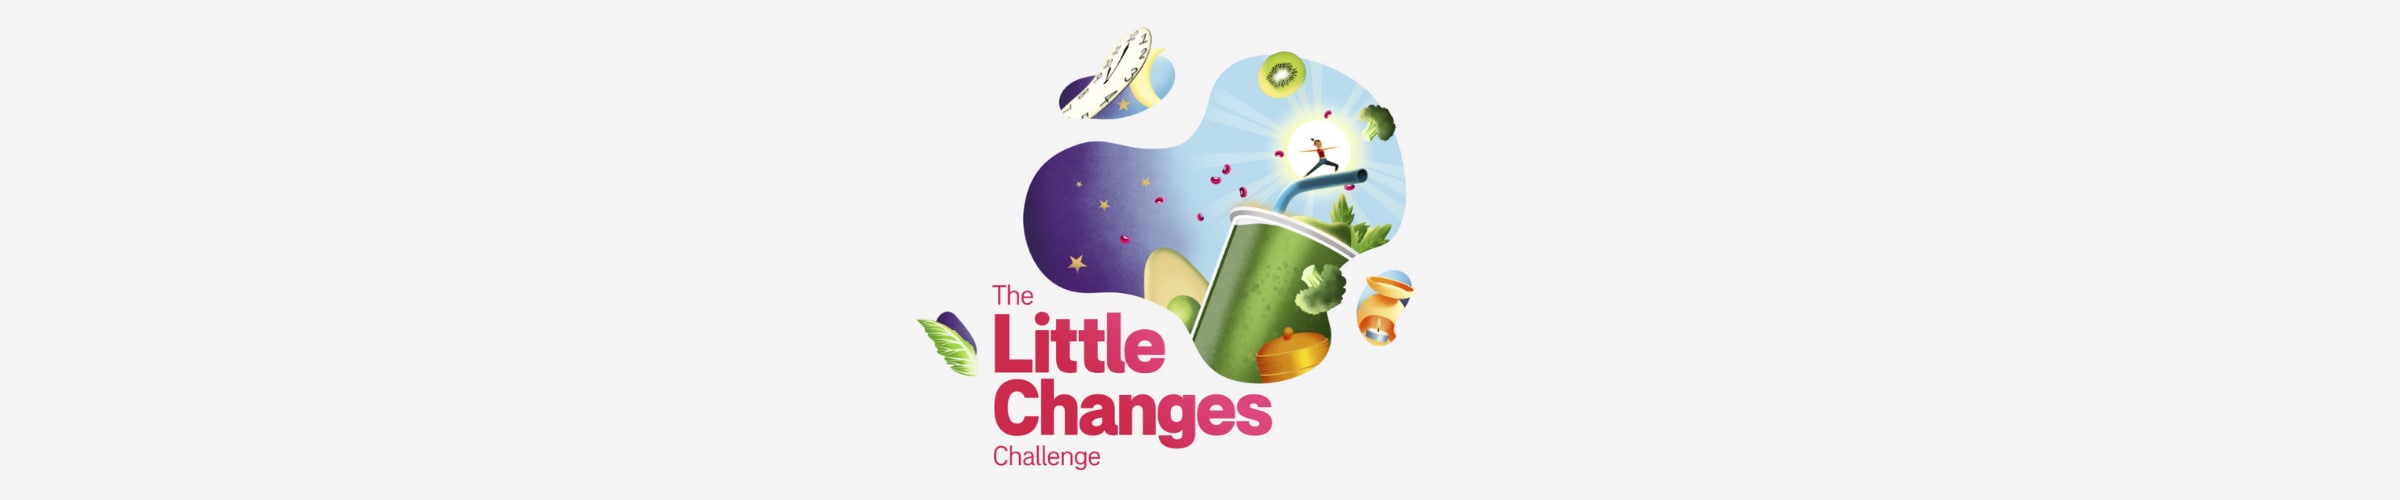 little changes challenge